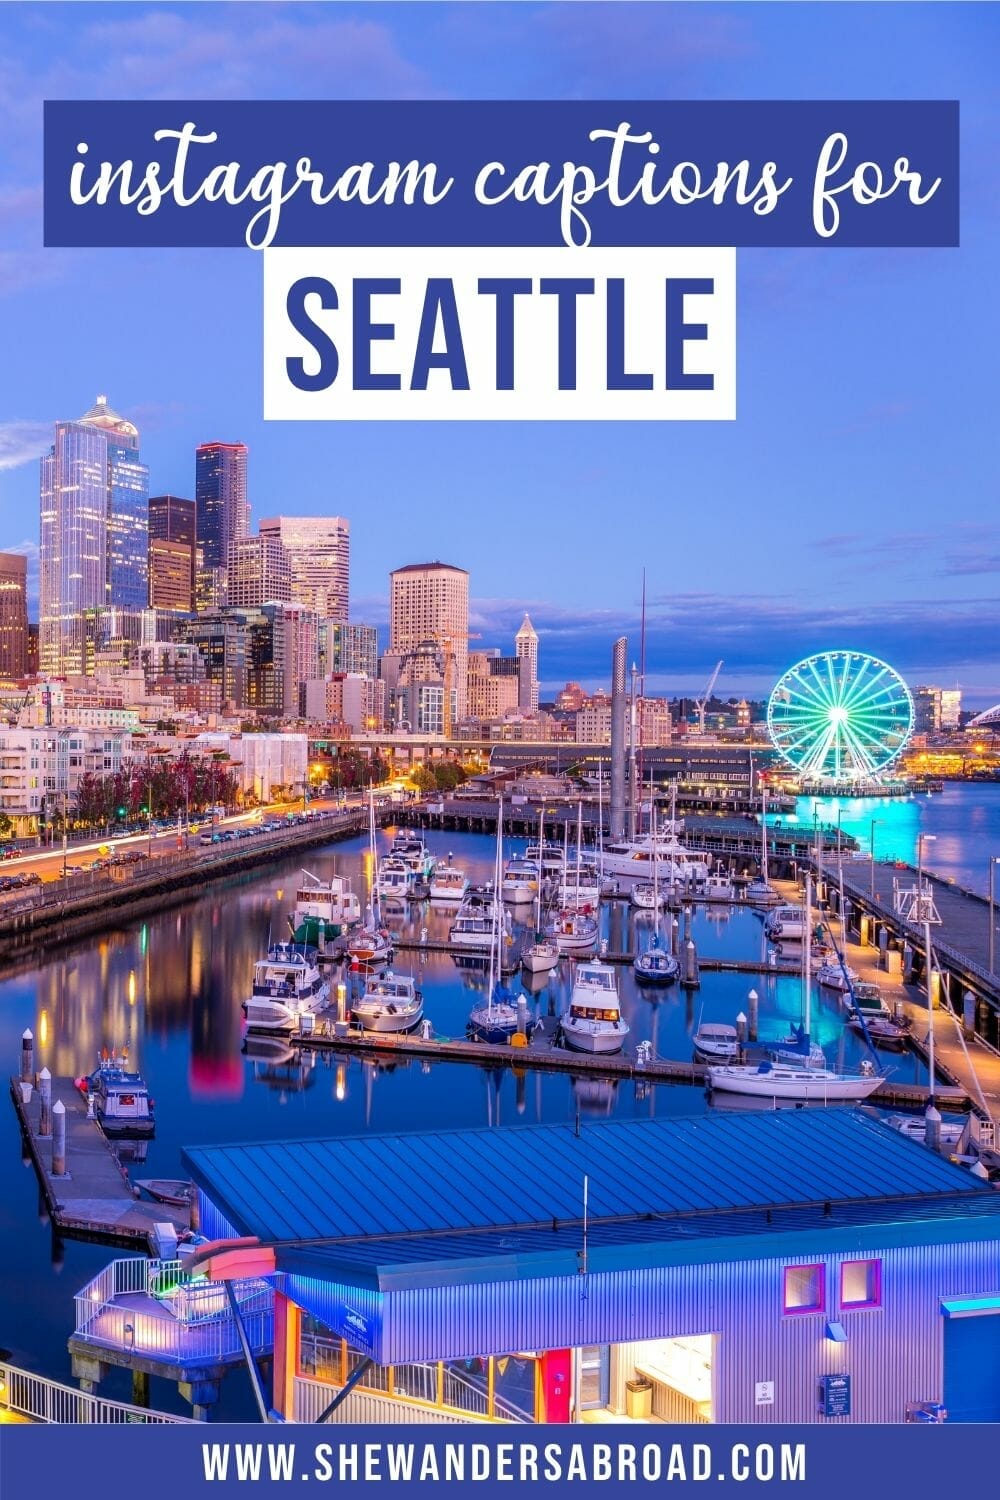 Best Seattle Quotes & Seattle Captions